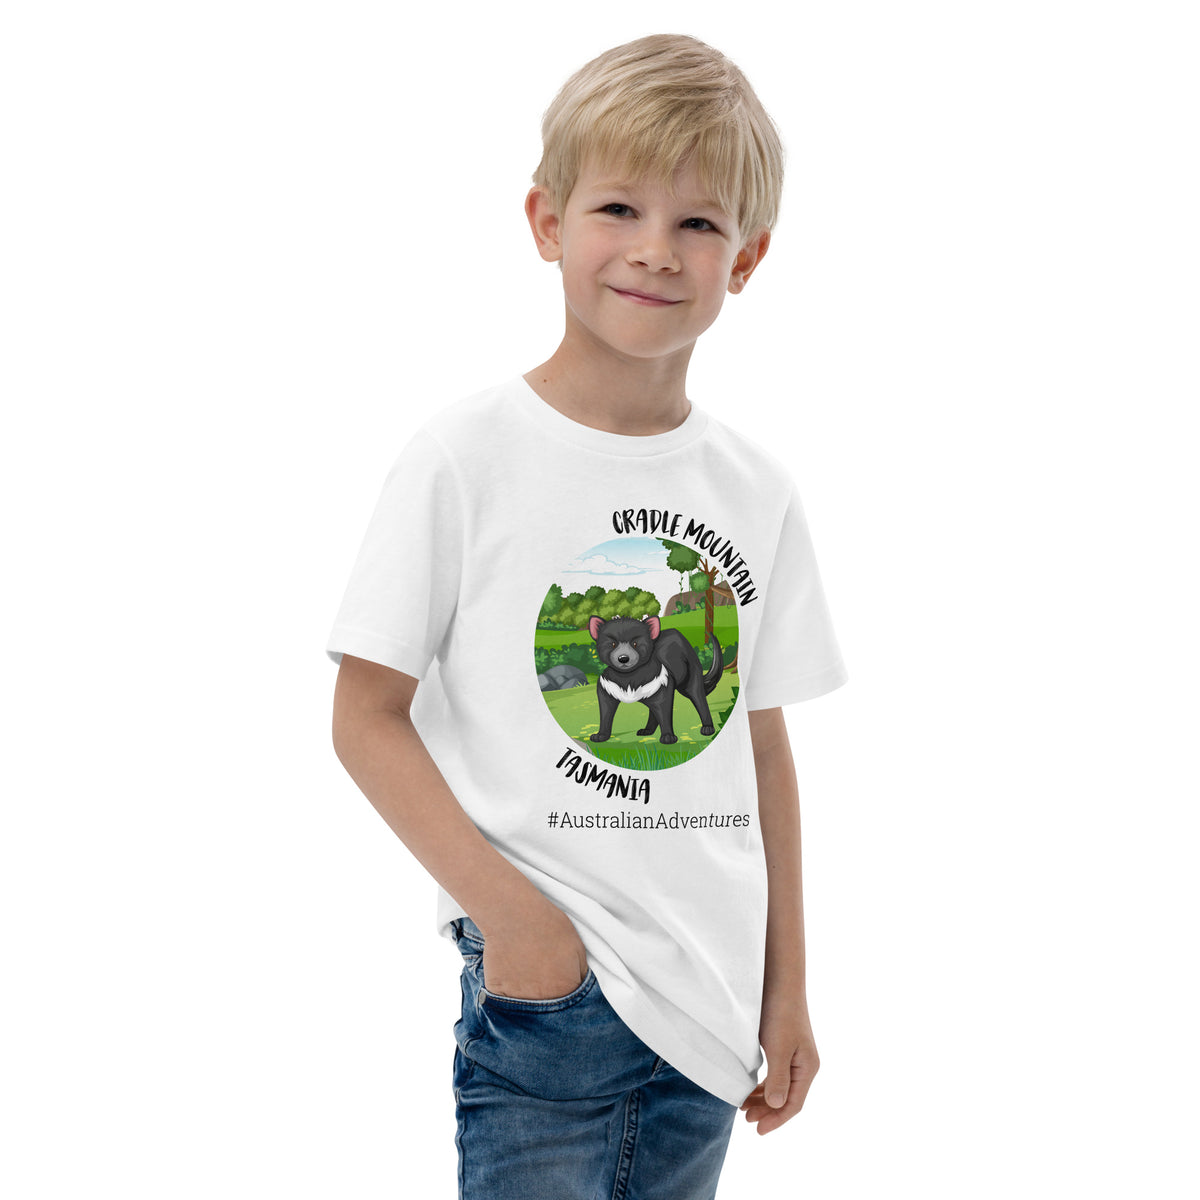 Cradle Mountain, Tasmania Kid's t-shirt